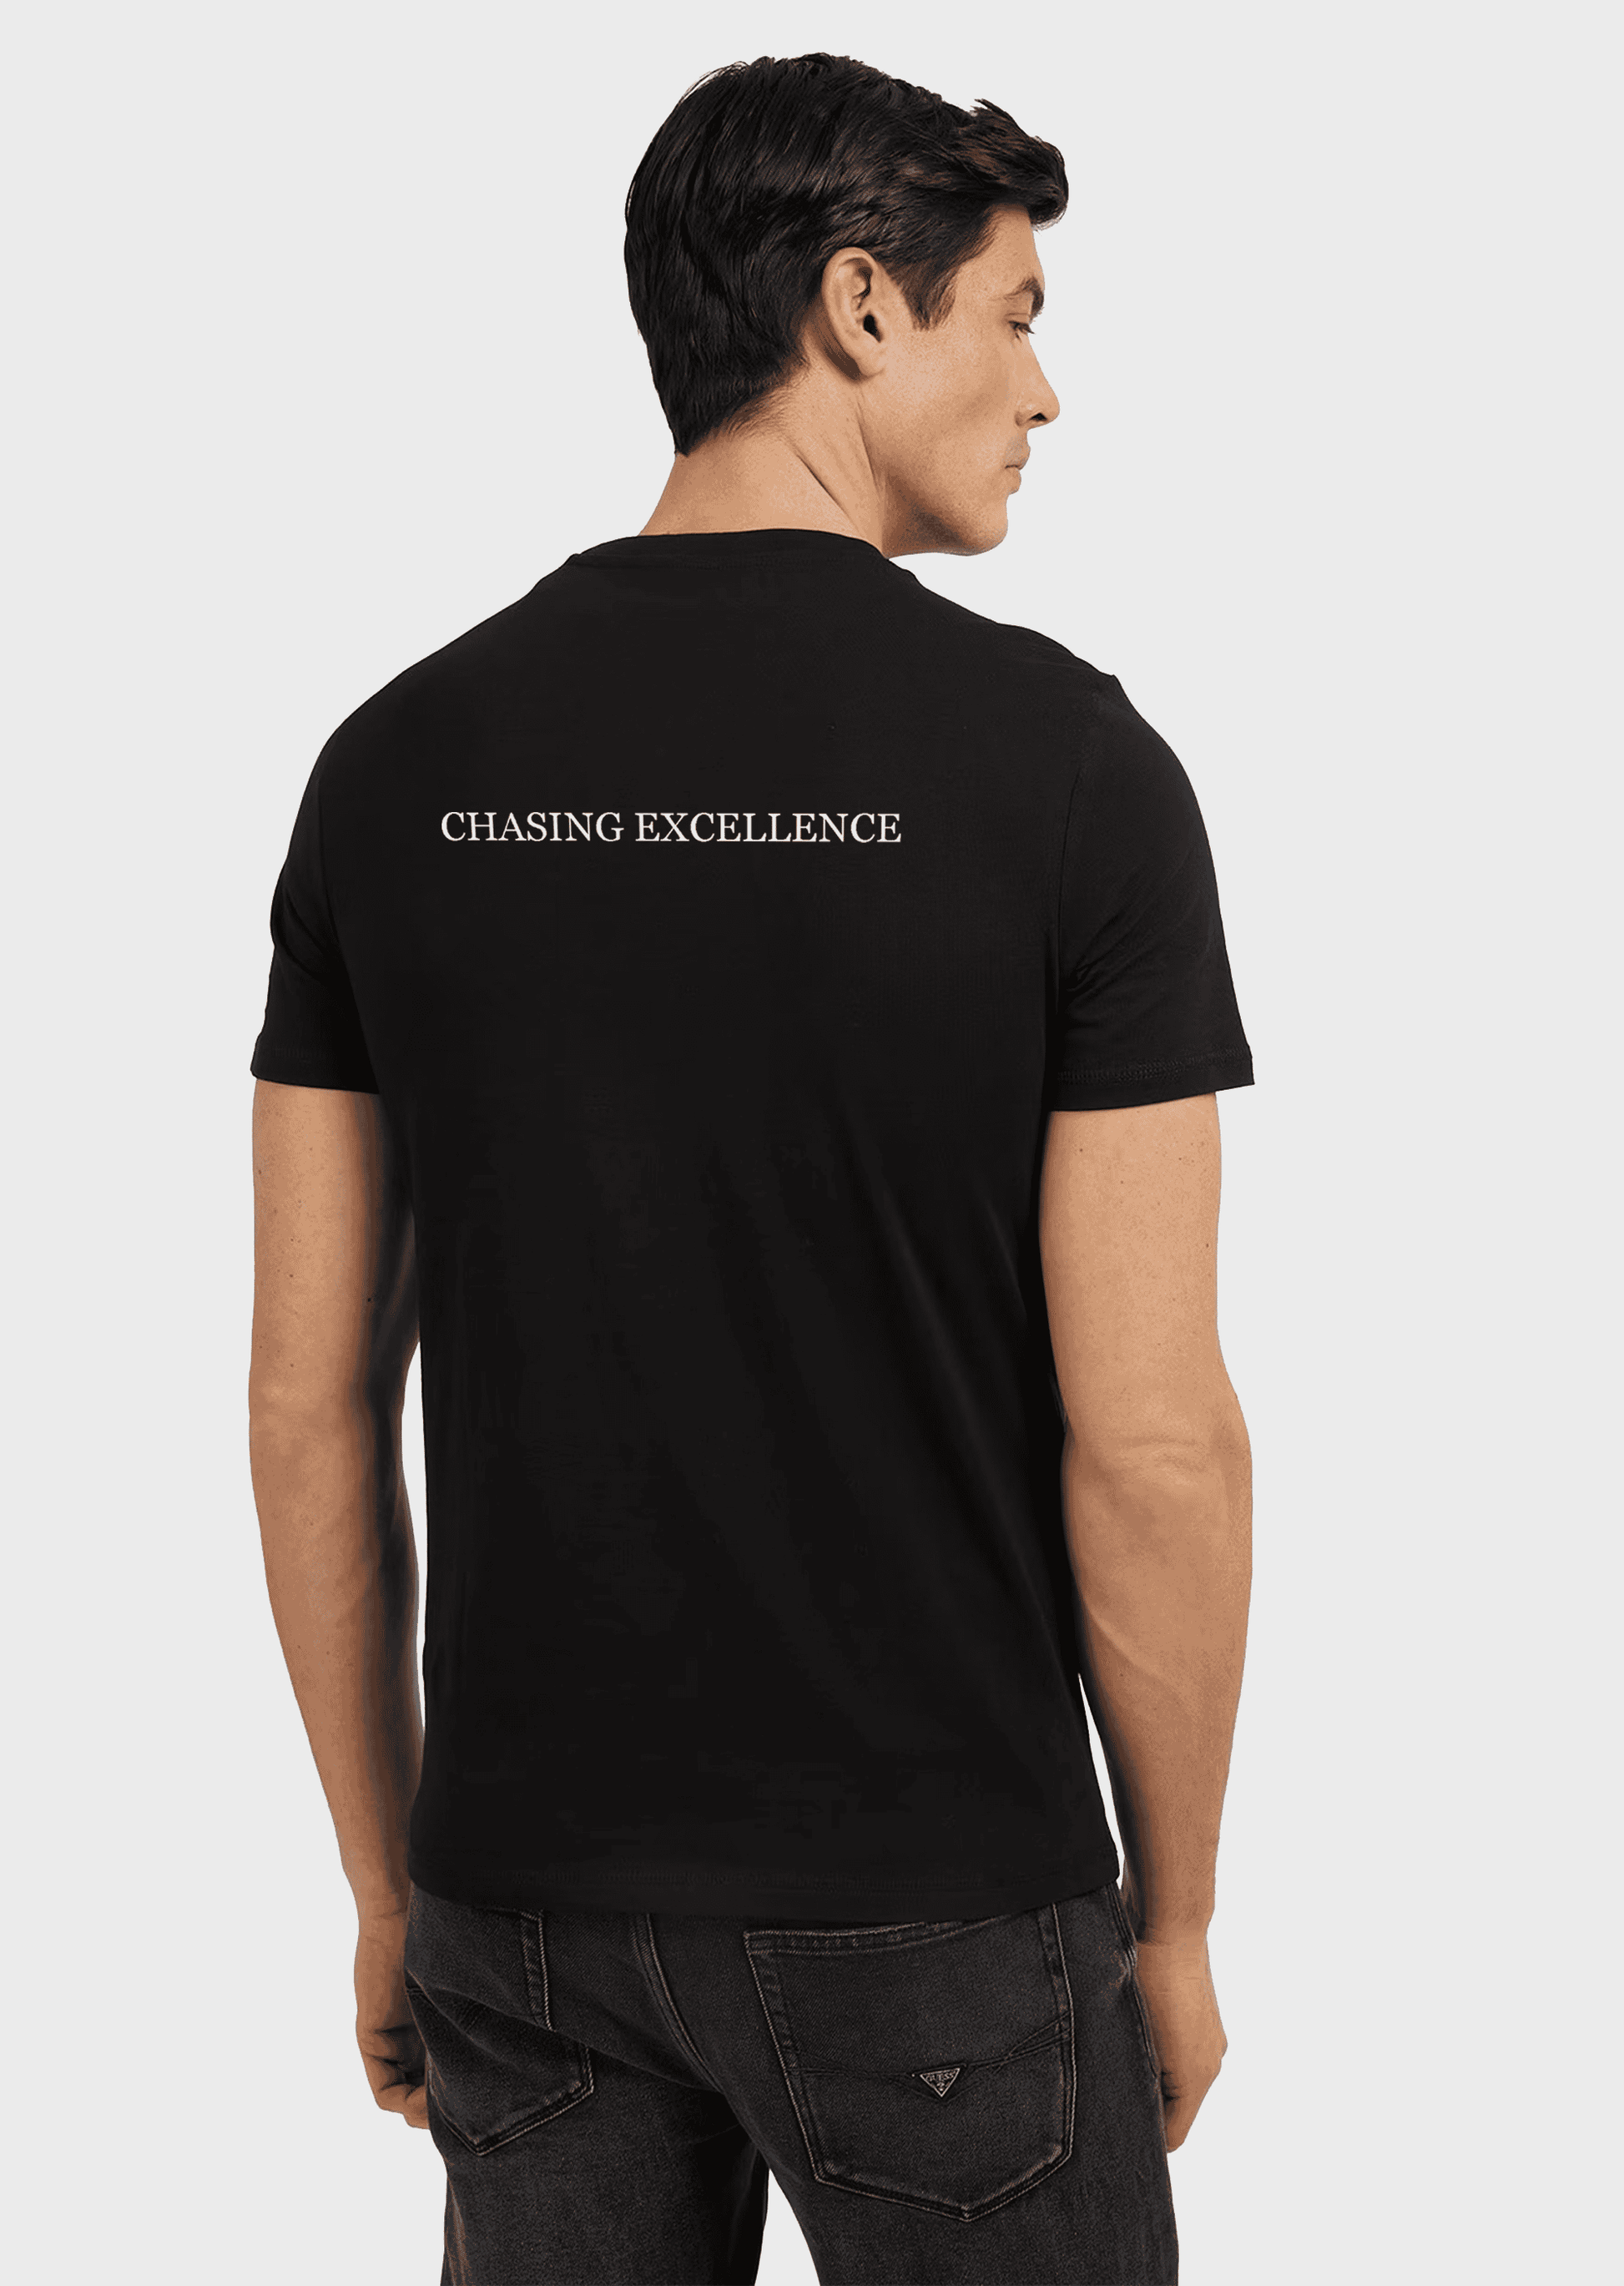 Apparel – Virtus T-Shirt Store Virtus The